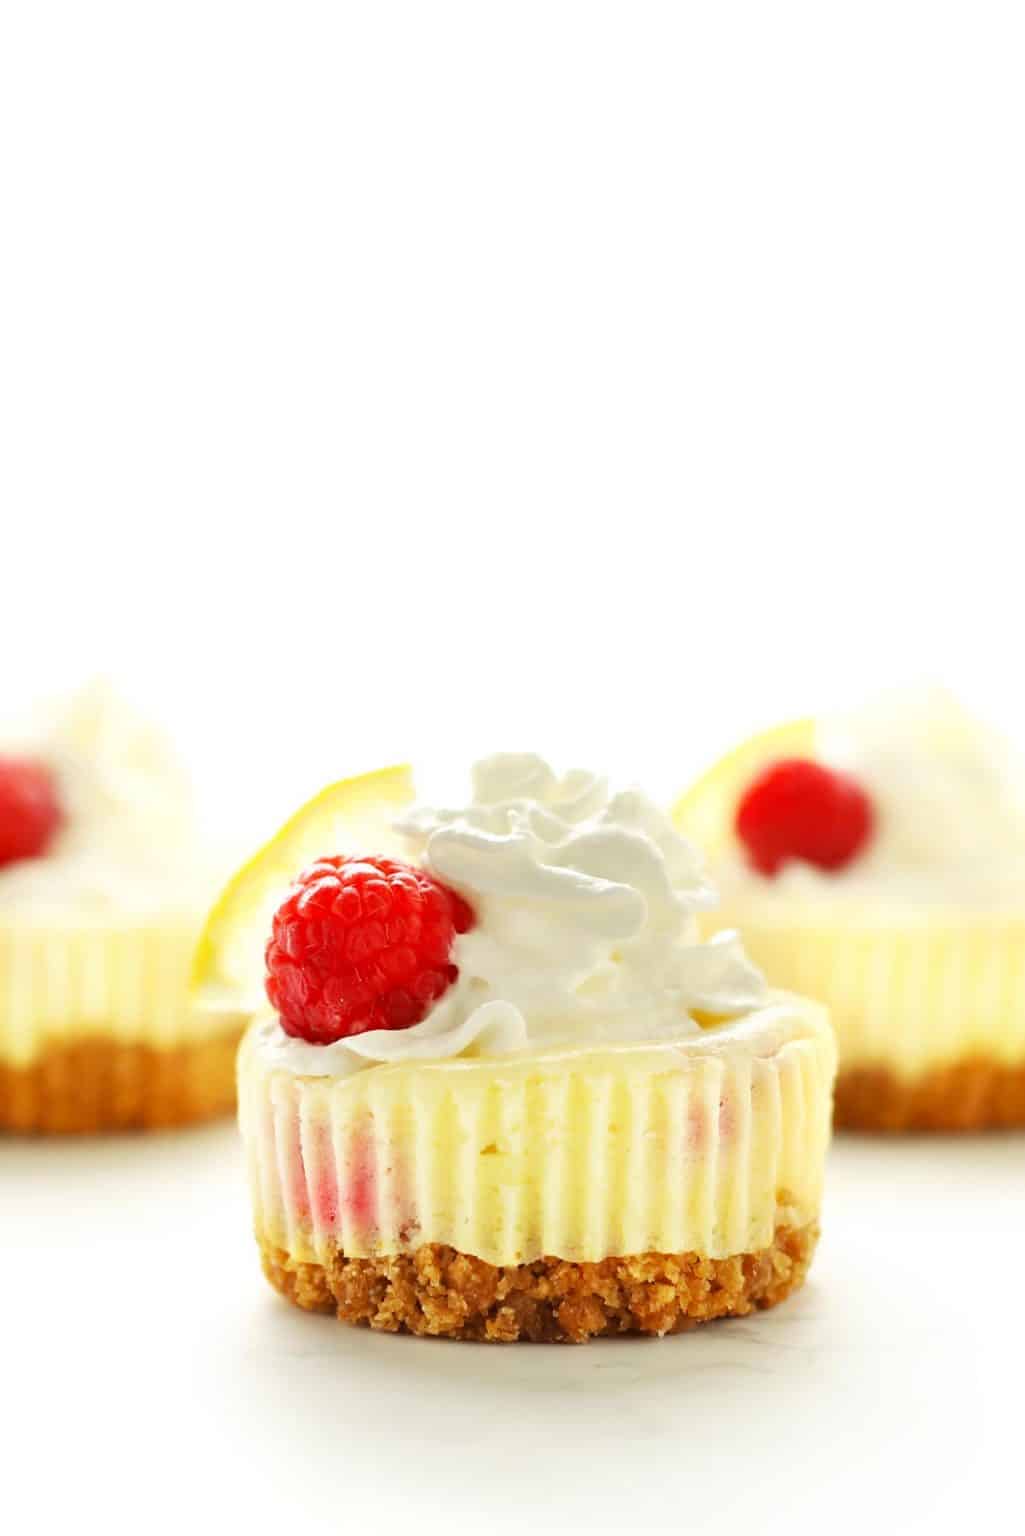 Raspberry Lemon Mini Cheesecakes - Zested Lemon